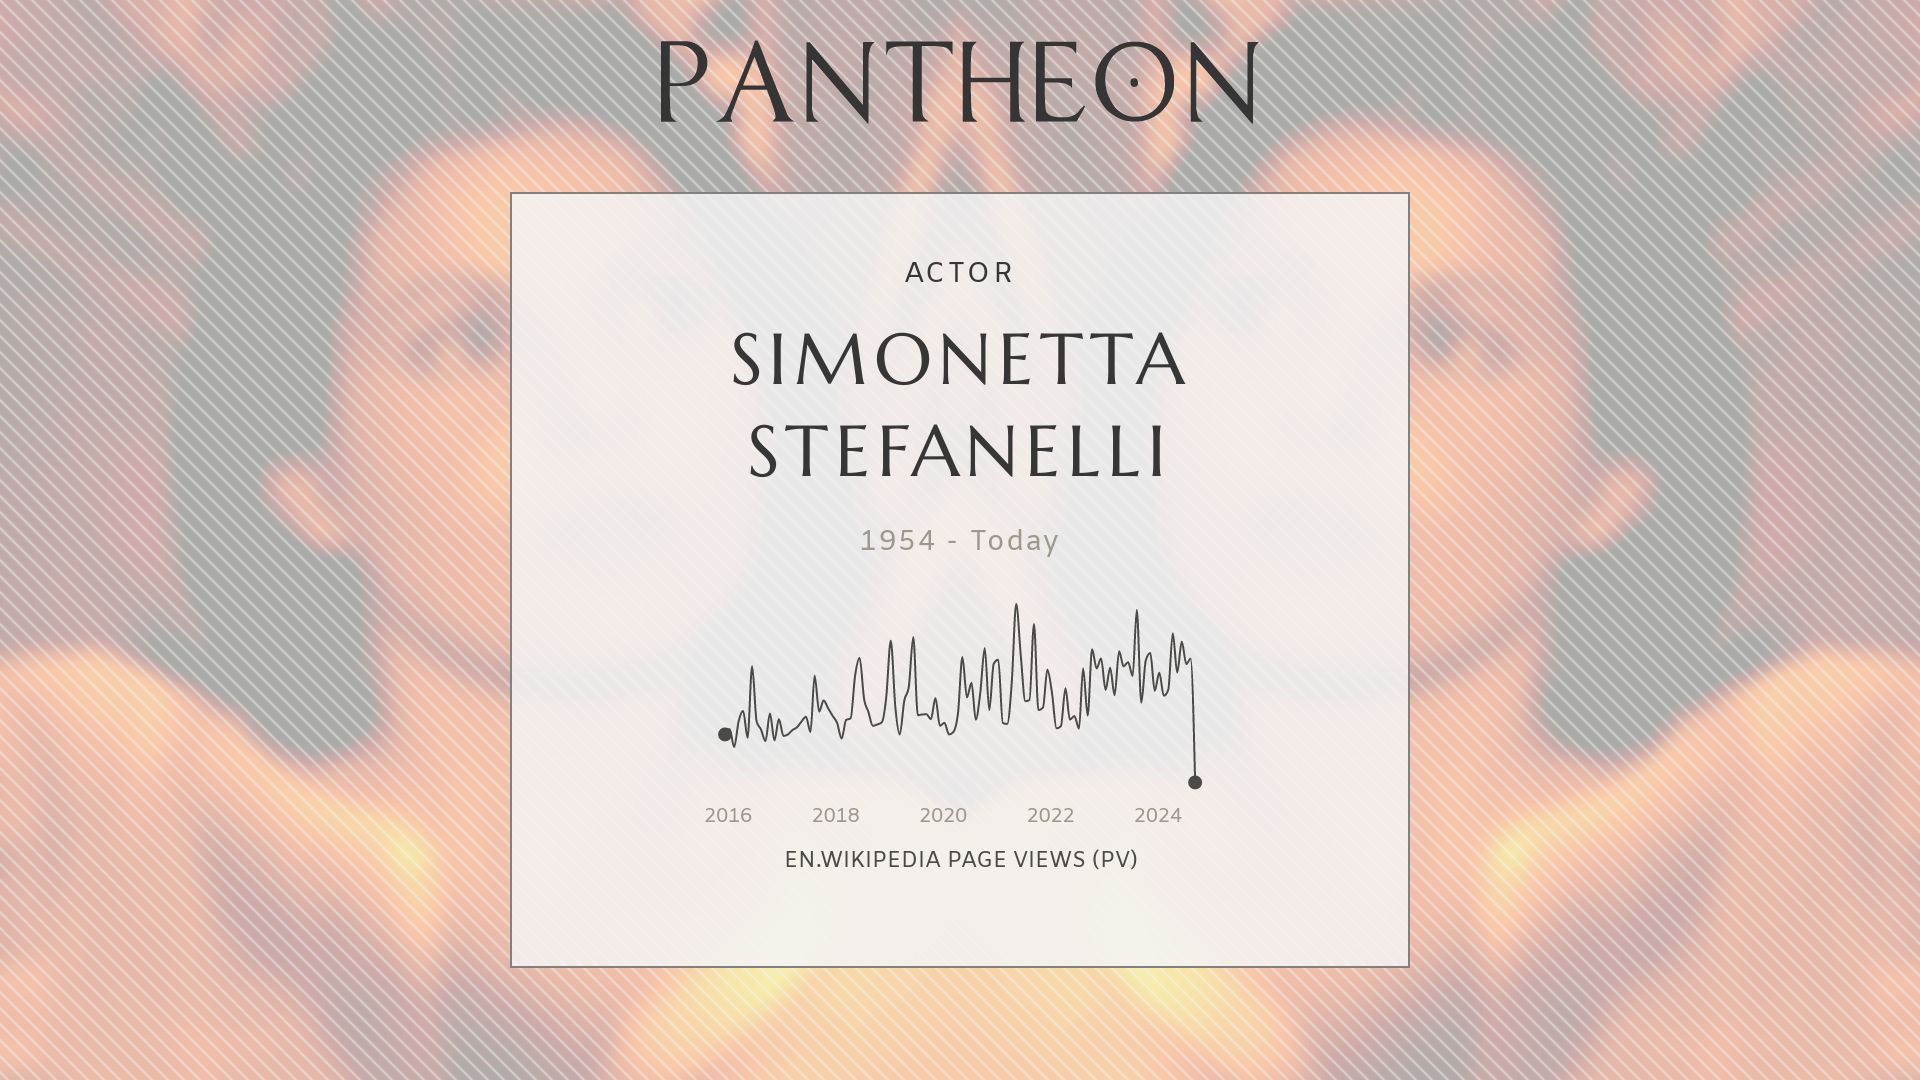 Simonetta stefanelli today